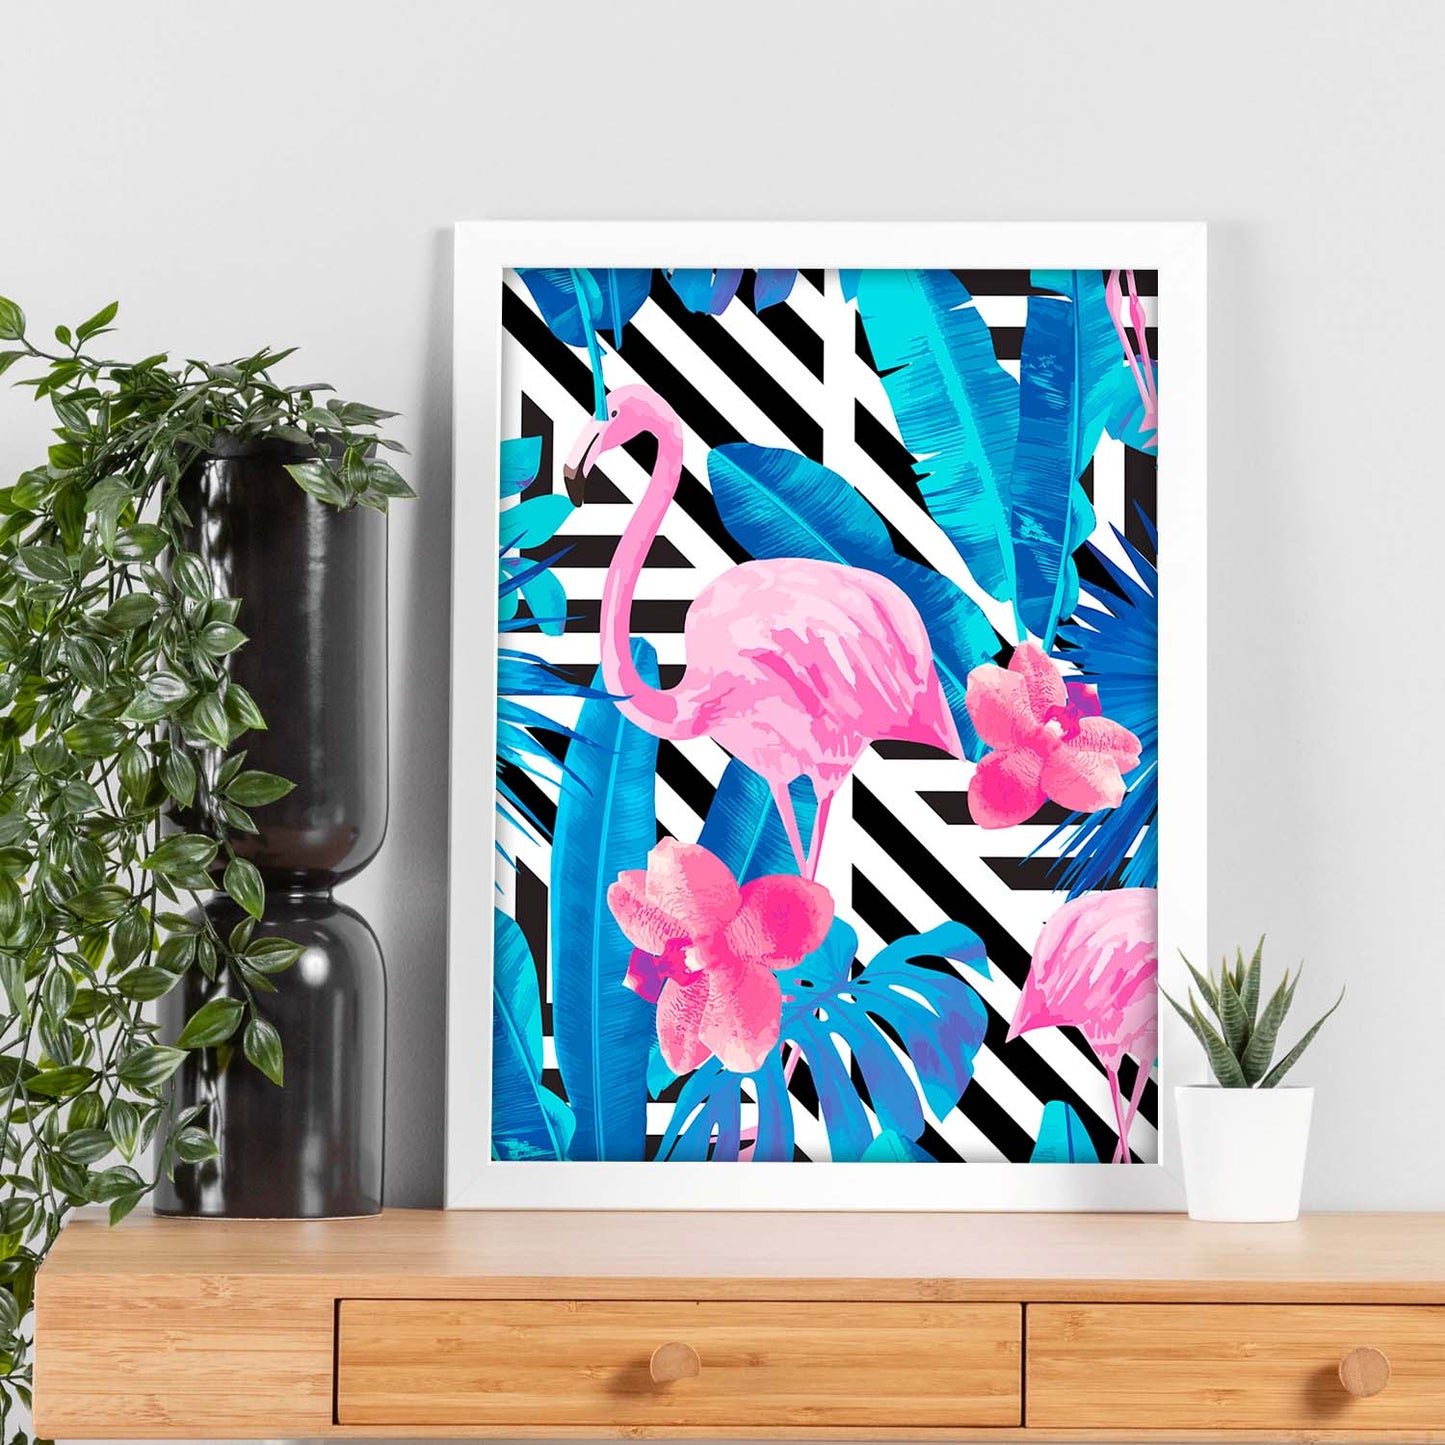 Poster de flamencos. Lámina Flamenco tropical con imágenes de flamencos sobre fondo colorido. Posters de aves con diseño.-Artwork-Nacnic-Nacnic Estudio SL